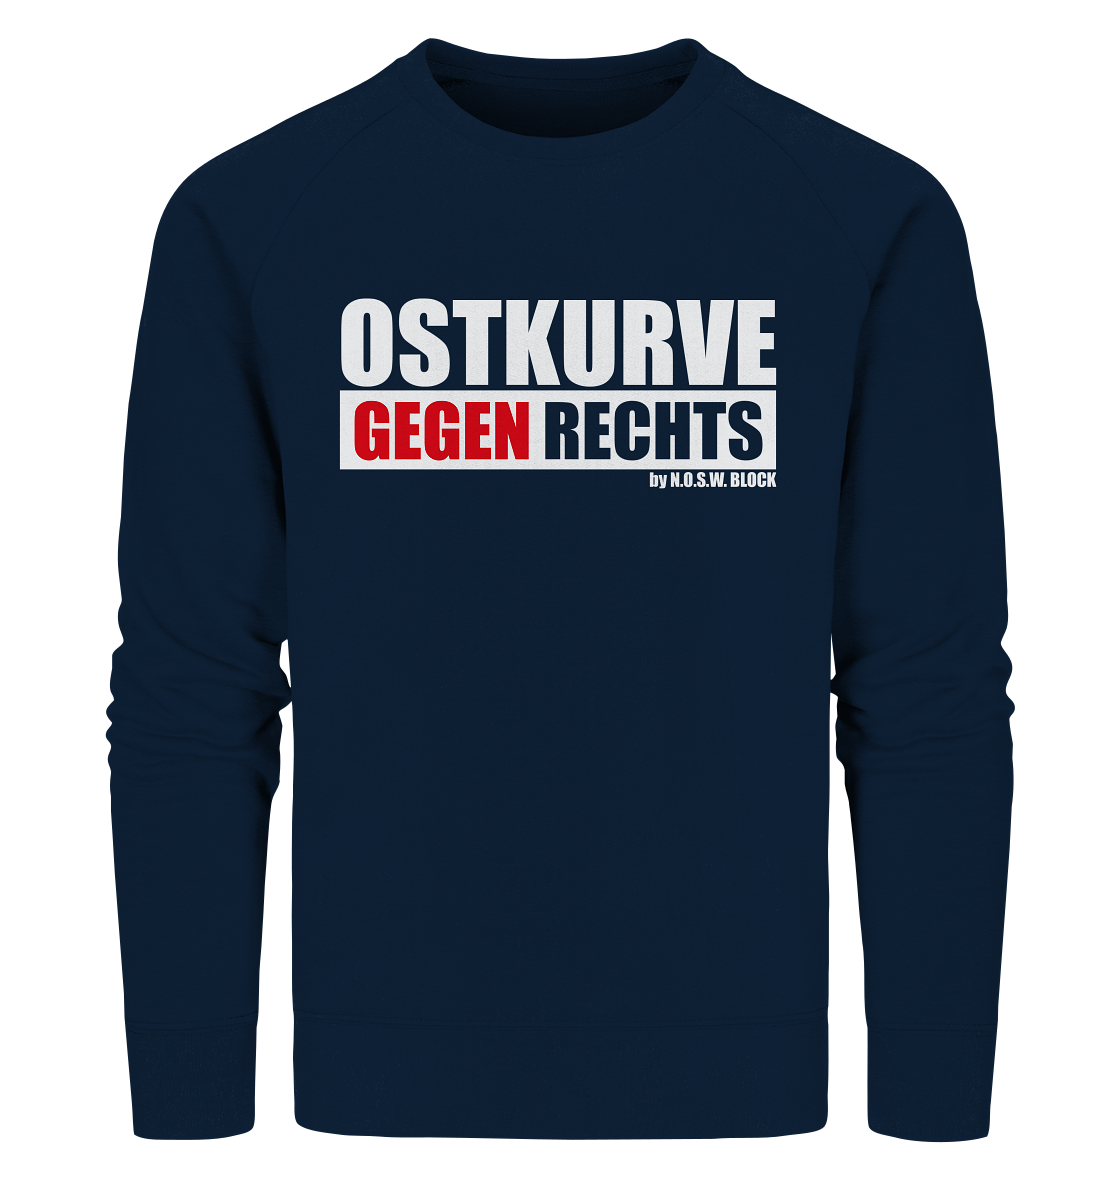 N.O.S.W. BLOCK Gegen Rechts Sweater "OSTKURVE GEGEN RECHTS" Männer Organic Sweatshirt navy